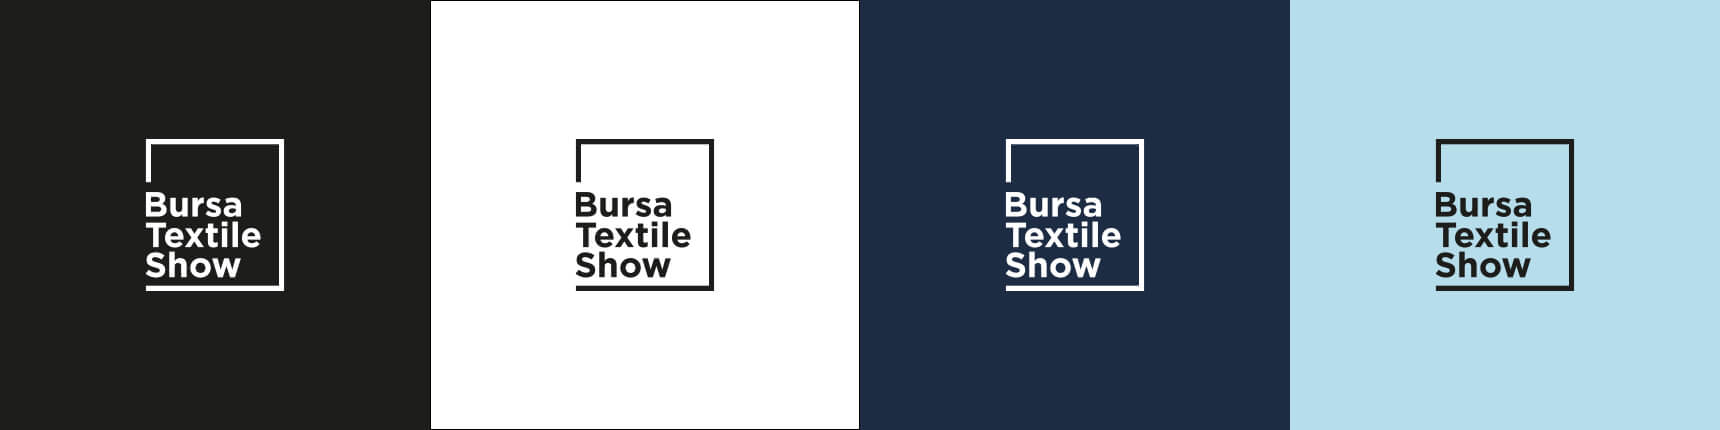 Bursa Textile Show-3- BURSA TEXTILE SHOW S_S 23 & 15-17 MARCH JOIN US-Metin-1-5- bts-logo intro-Metin -2-6- logo size _ security-7- renkler üzerinde logo